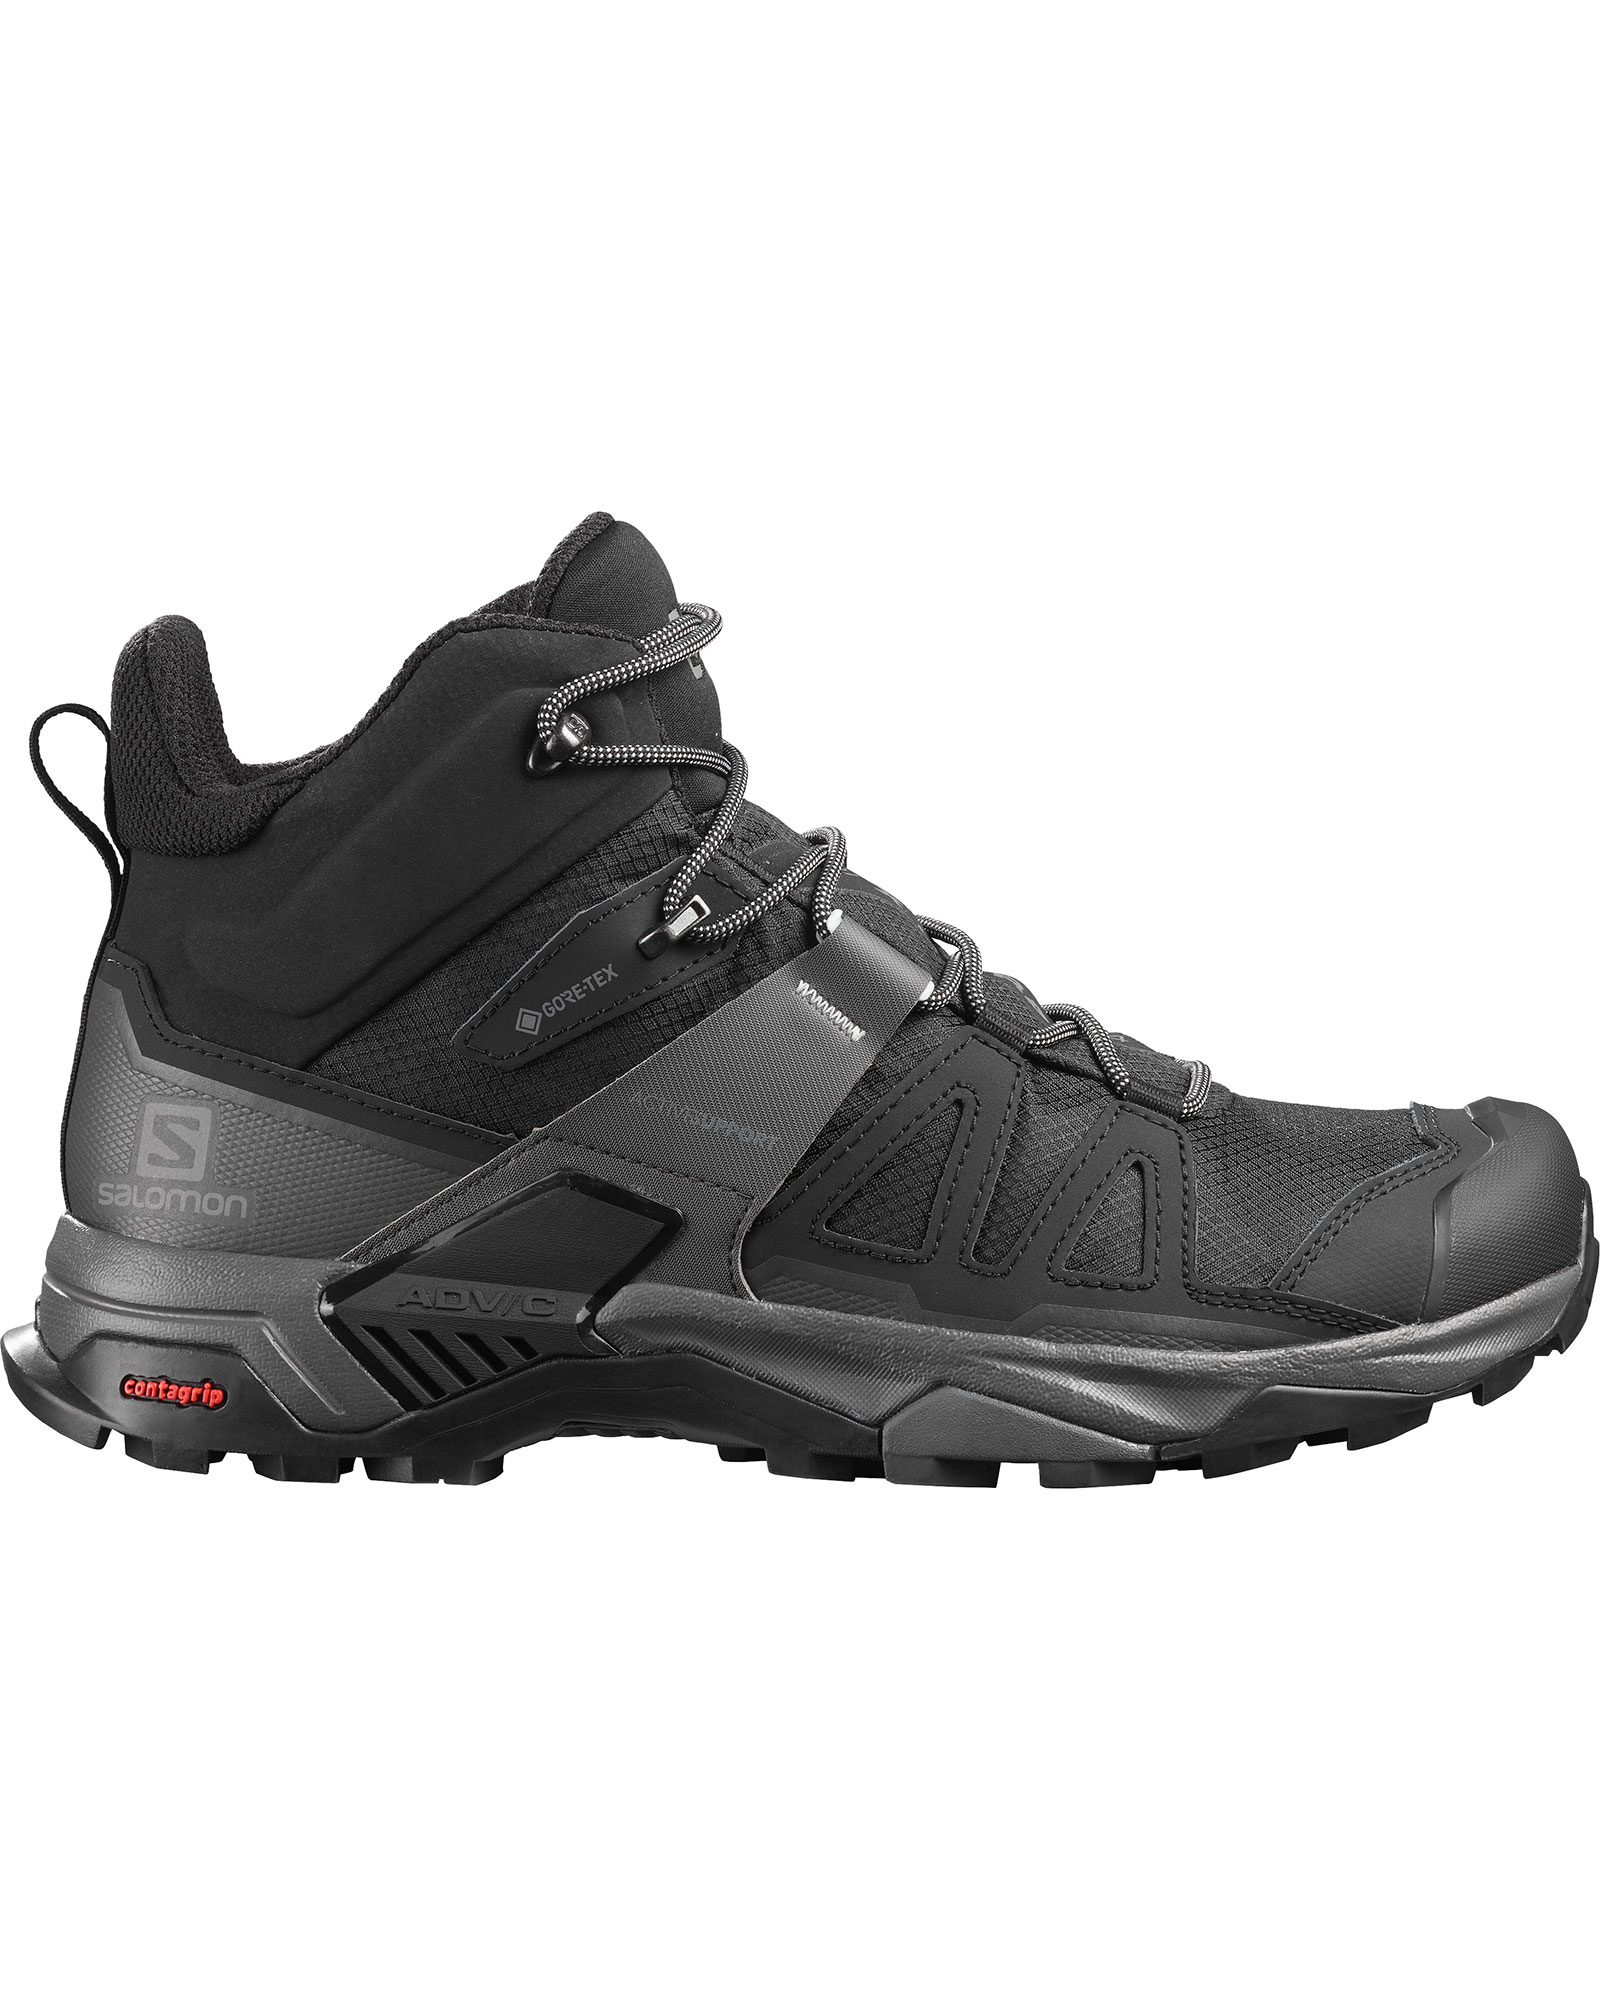 Salomon X Ultra 4 Mid GORE TEX Men’s Boots - Black/Magnet/Pearl Blue UK 8.5